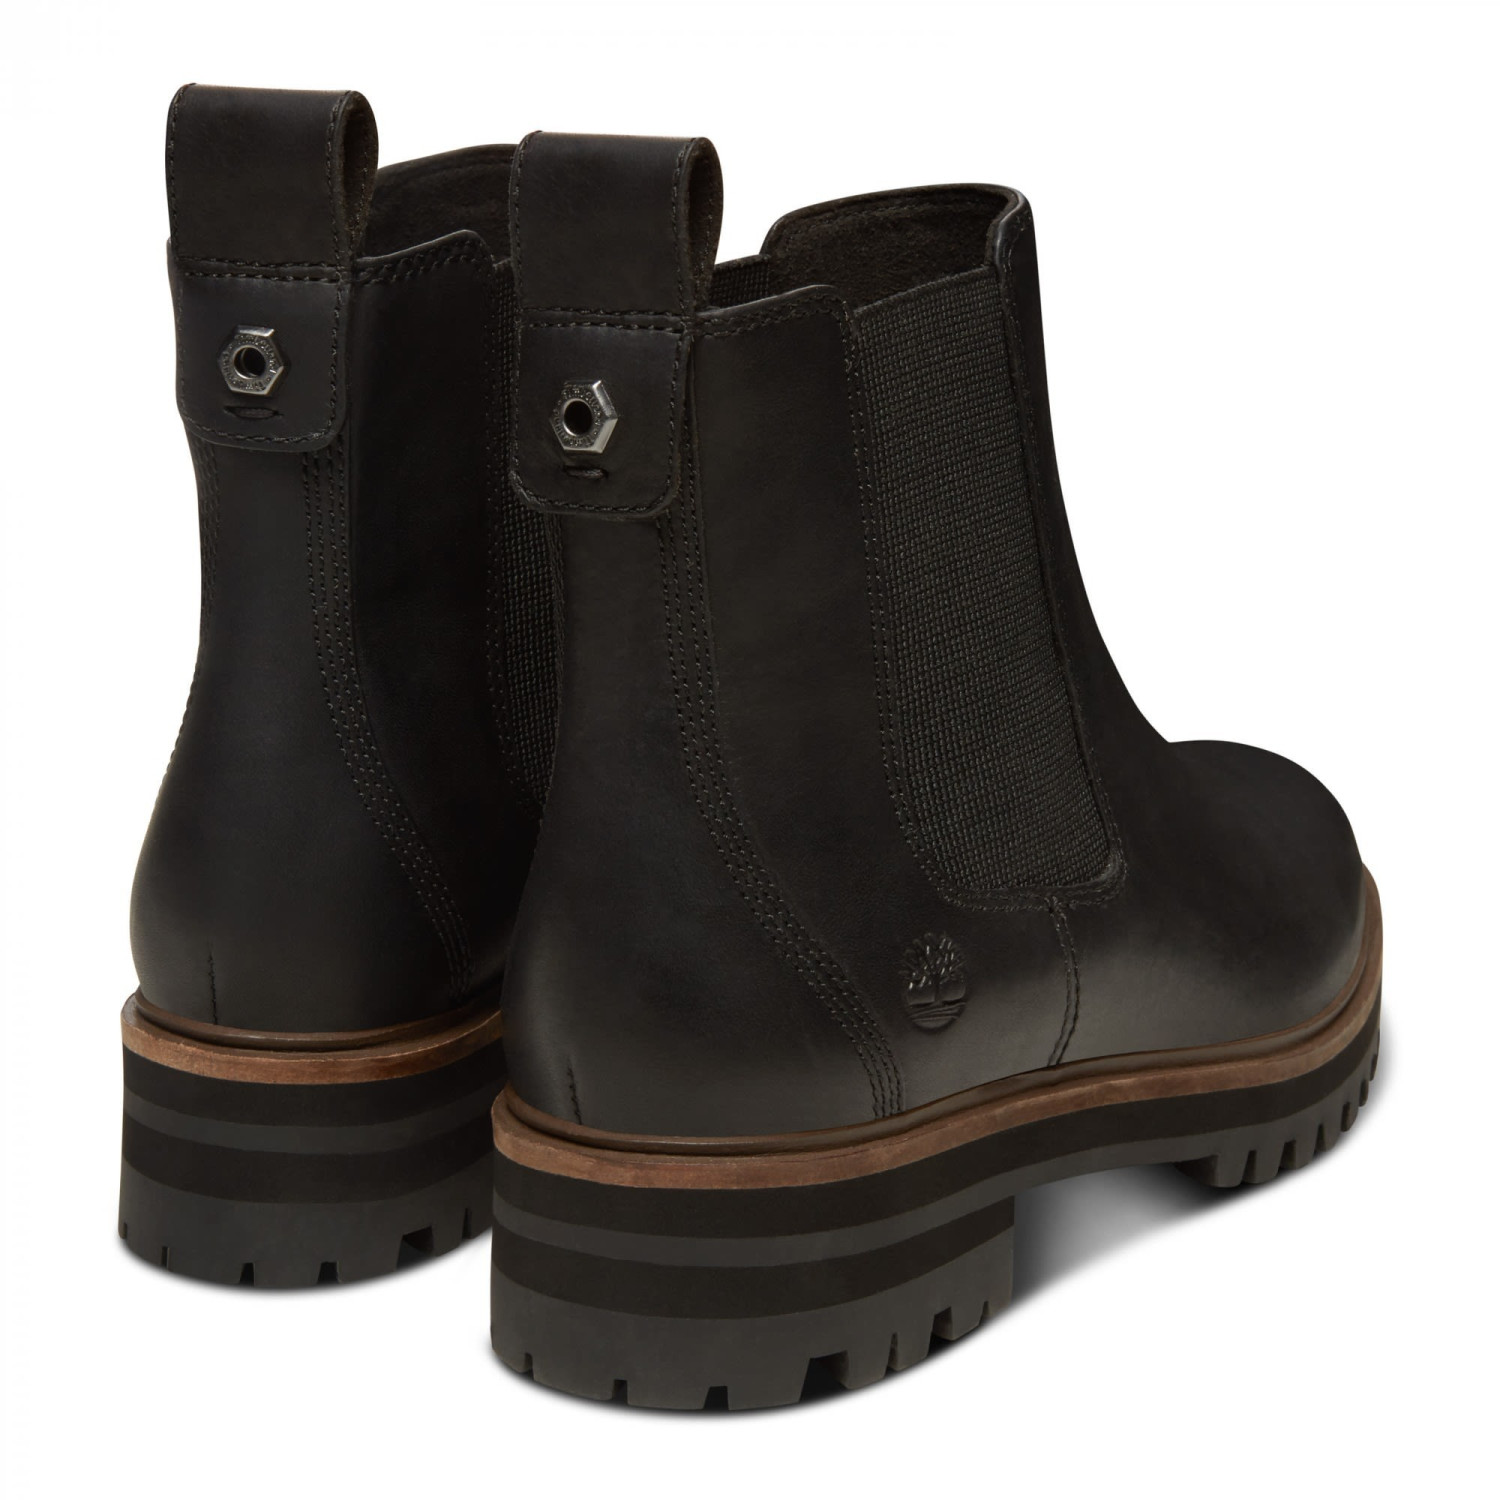 Timberland London Square Chelsea Boots Women black ab 92,99 â¬ | Preisvergleich bei idealo.de